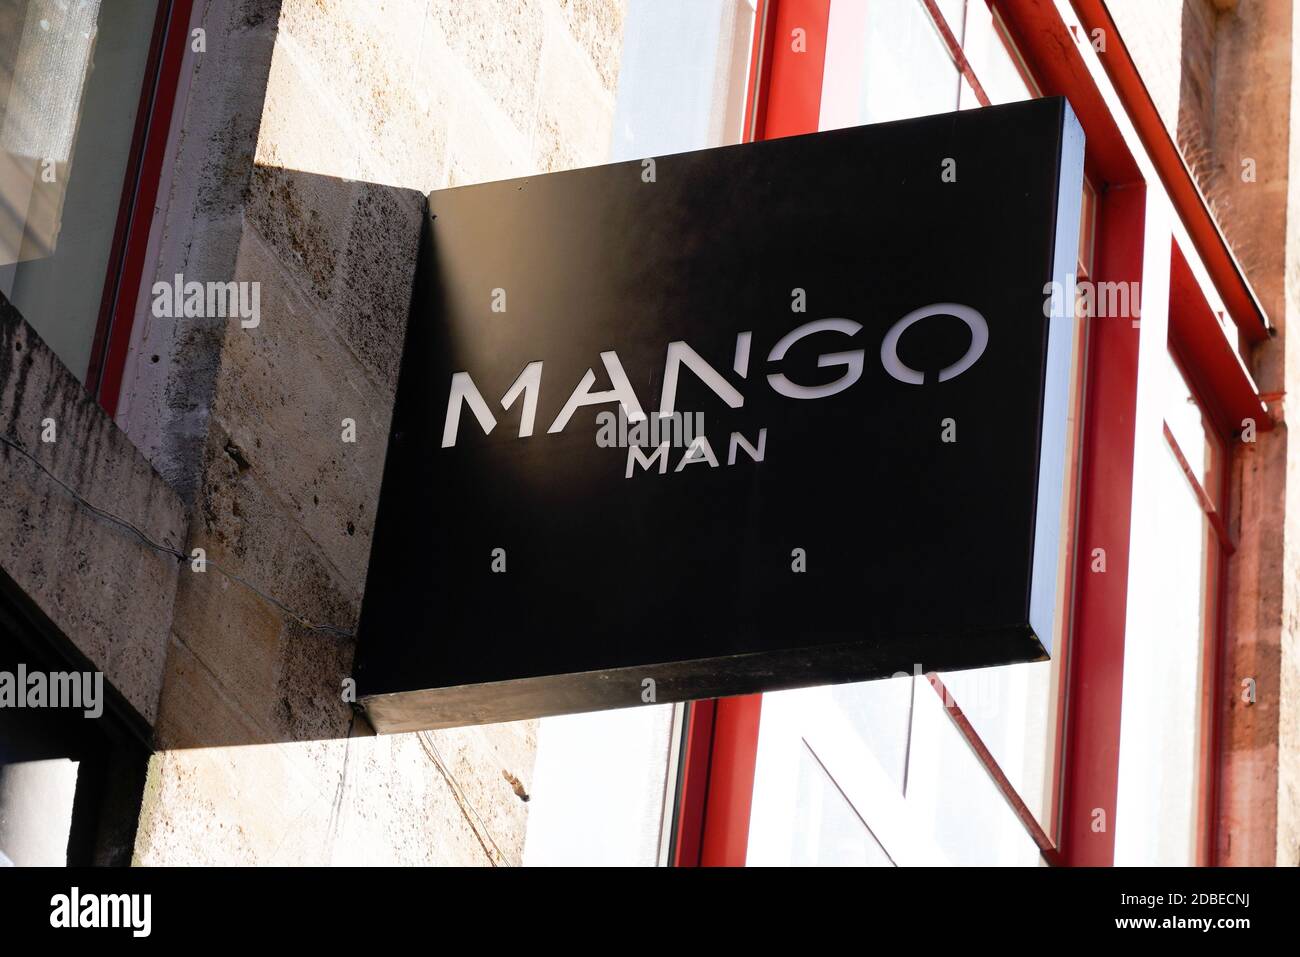 Mango man hi-res stock photography and images - Alamy